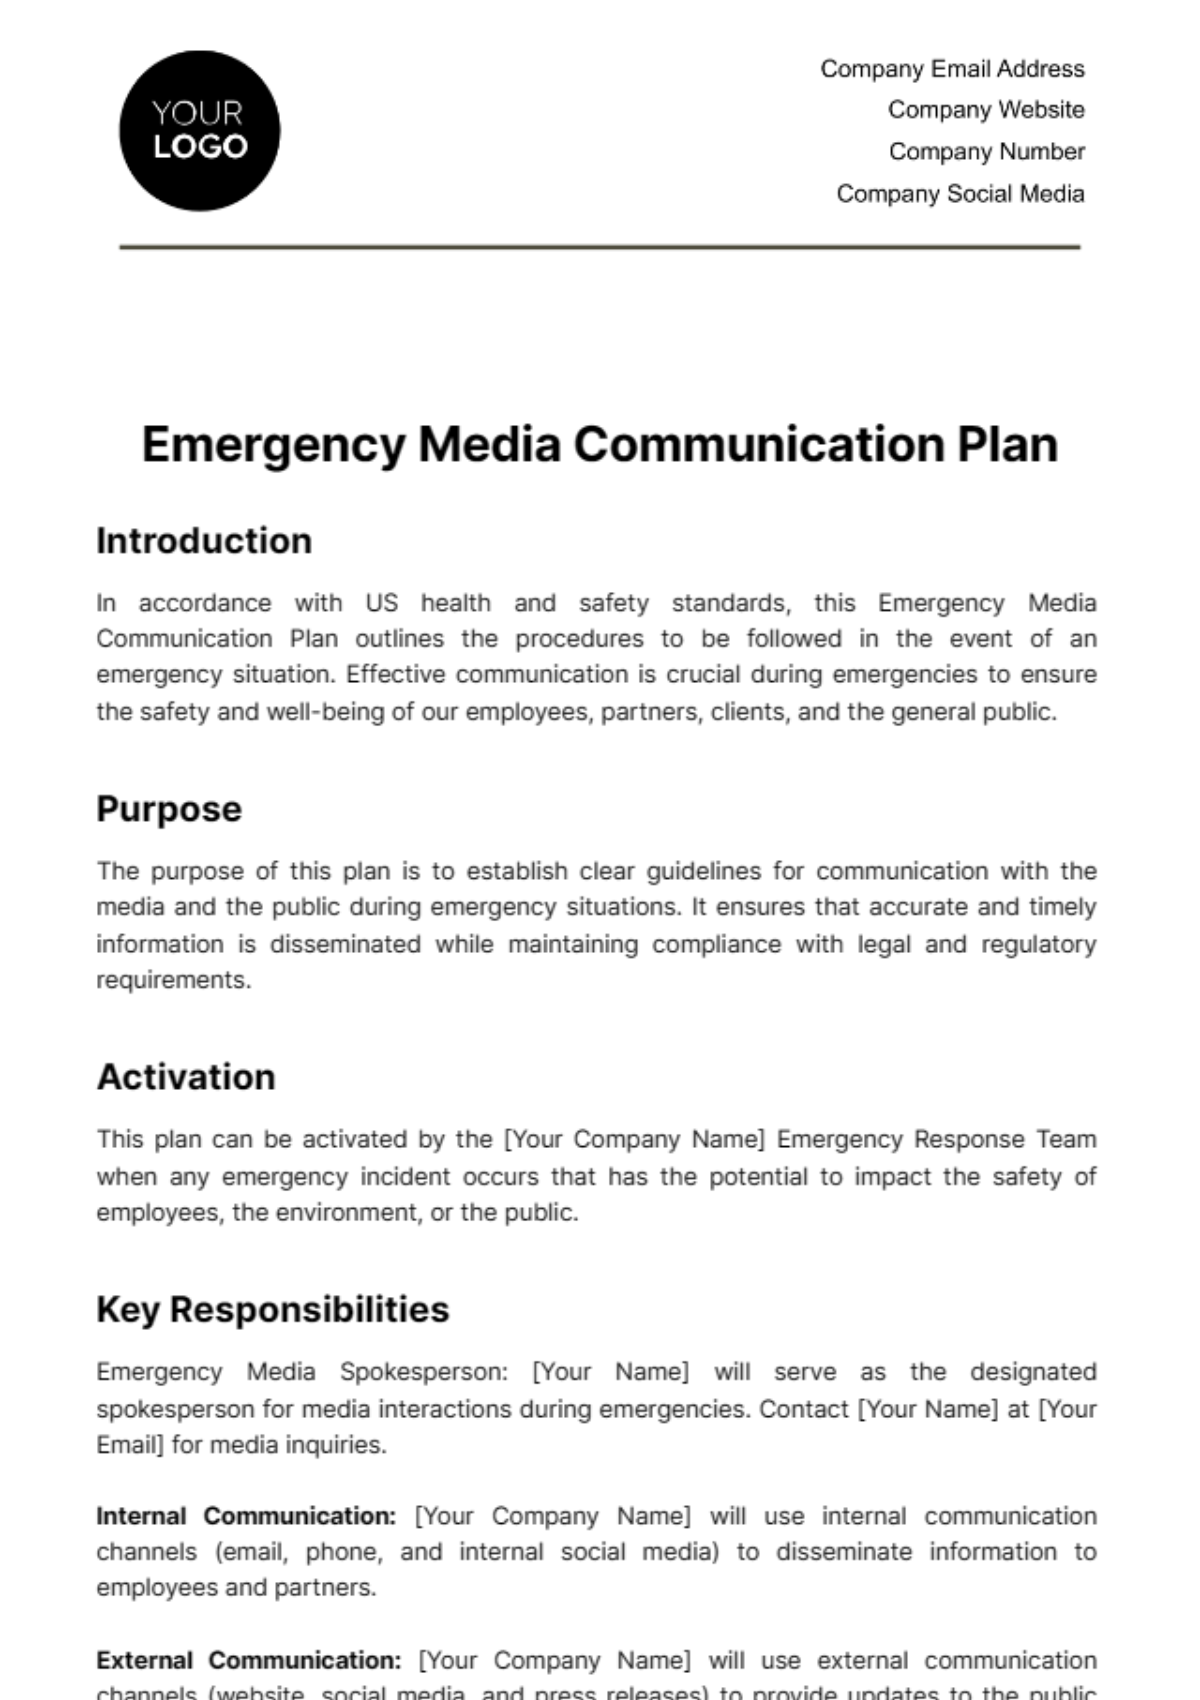 Free Emergency Media Communication Plan Template